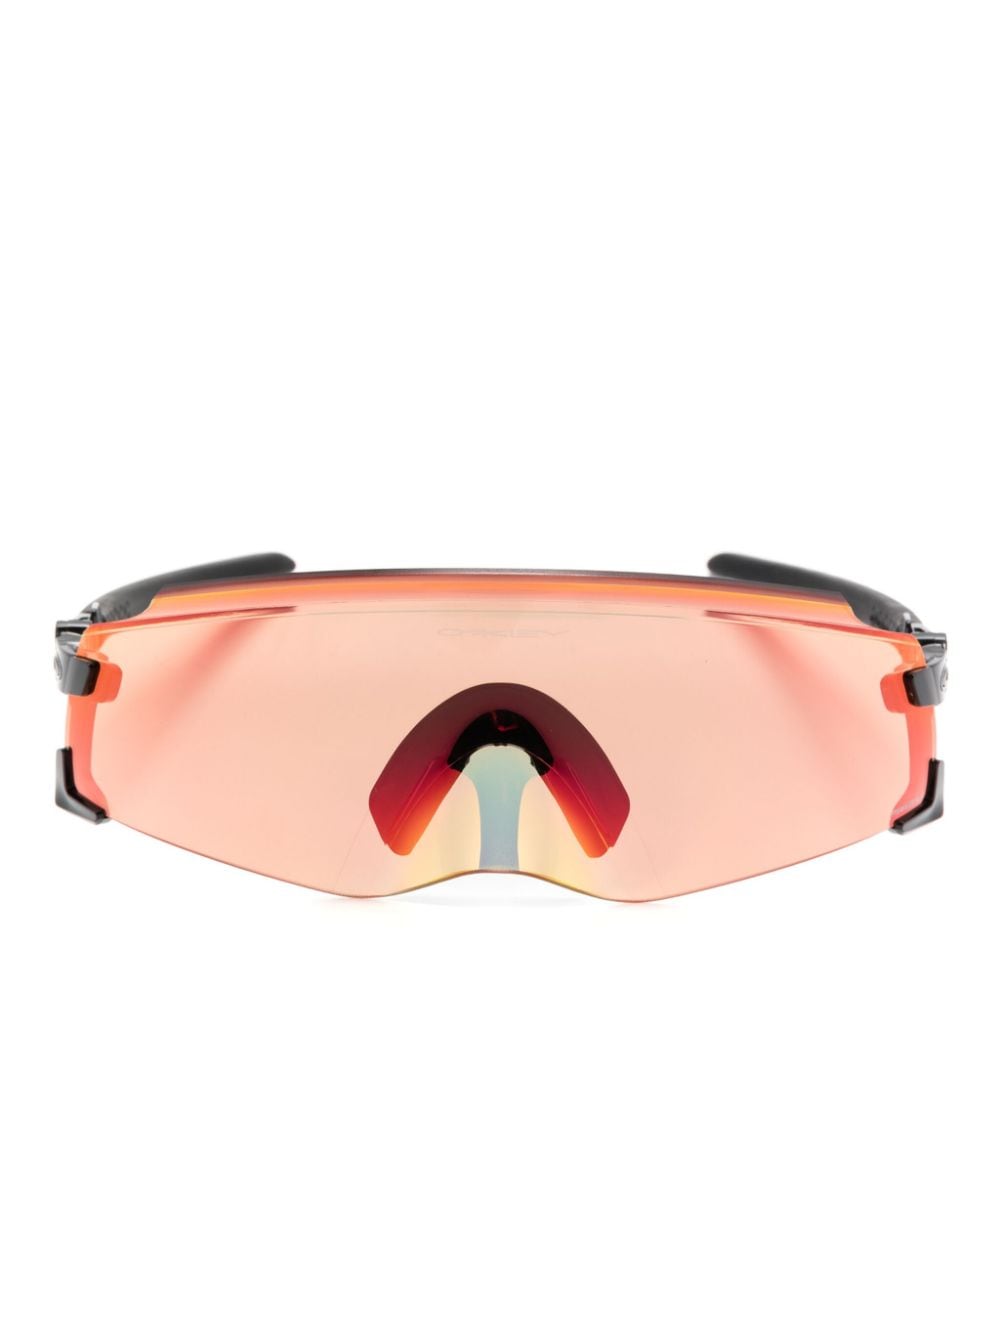 Kato wraparound-frame sunglasses<BR/><BR/><BR/>